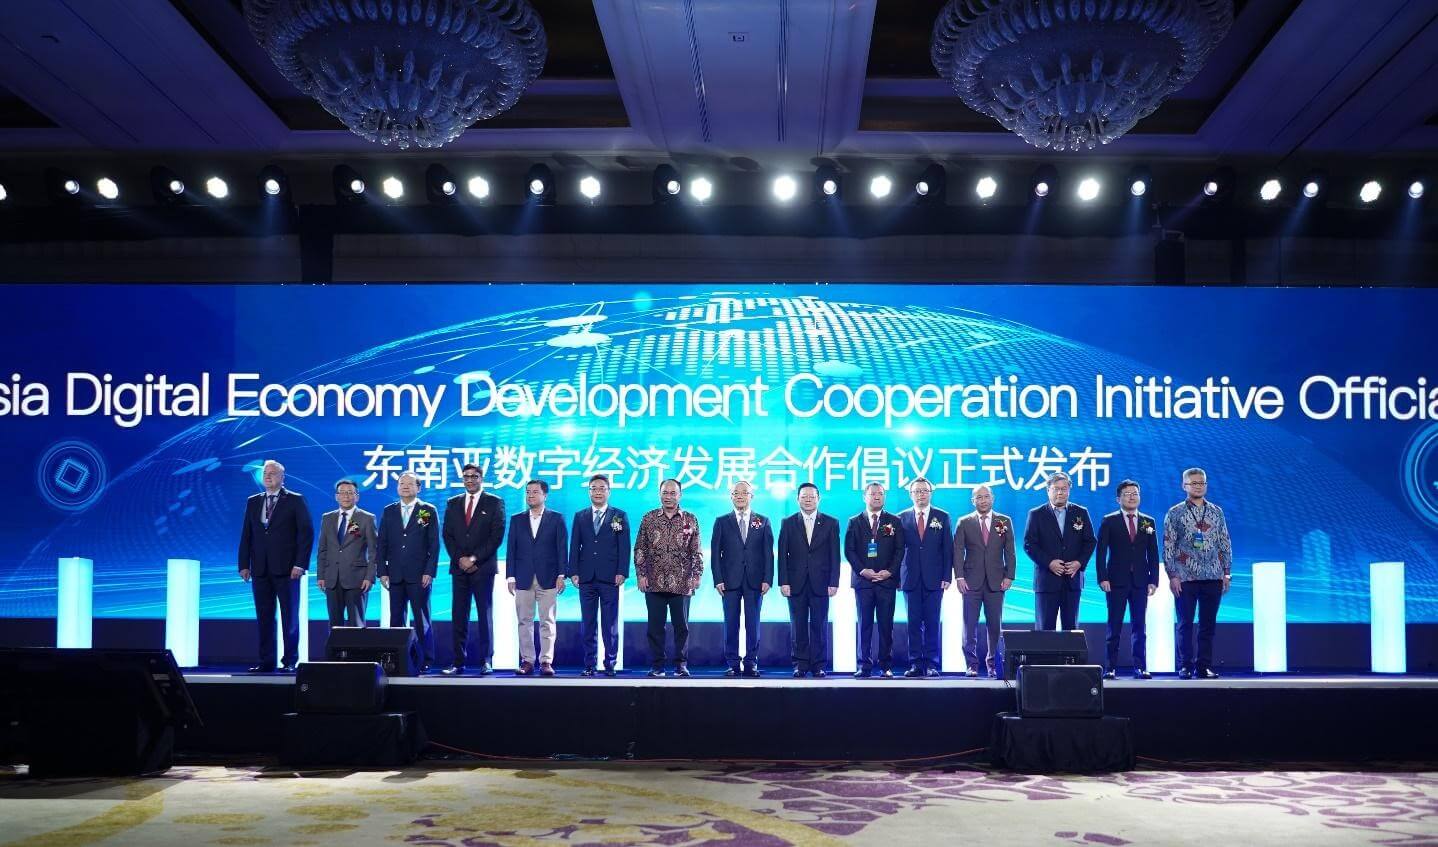 Southeast Asia Digital Economy Development Cooperation Initiative